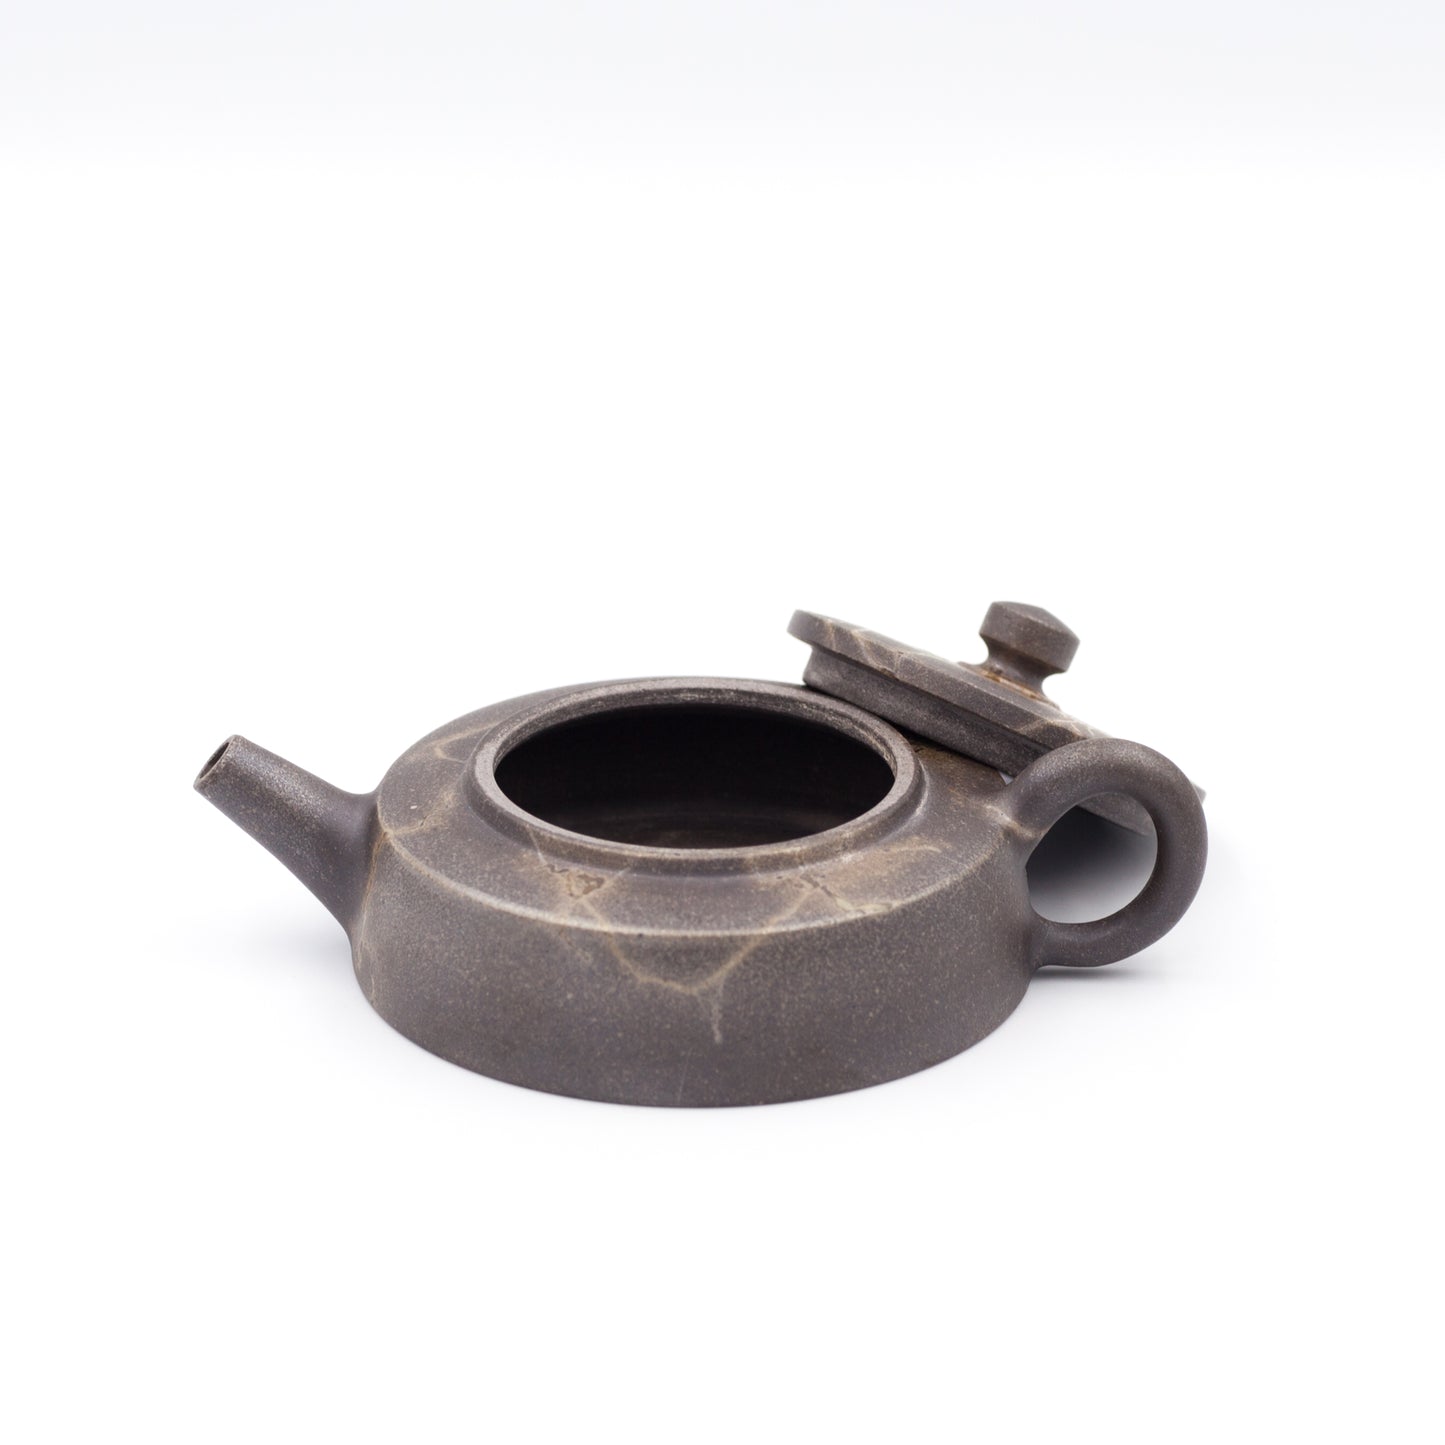 A Tokoname Mogake Kyusu (teapot) by Gafu Ito. 伊藤雅風　常滑　藻掛　急須 平角形 茶銚